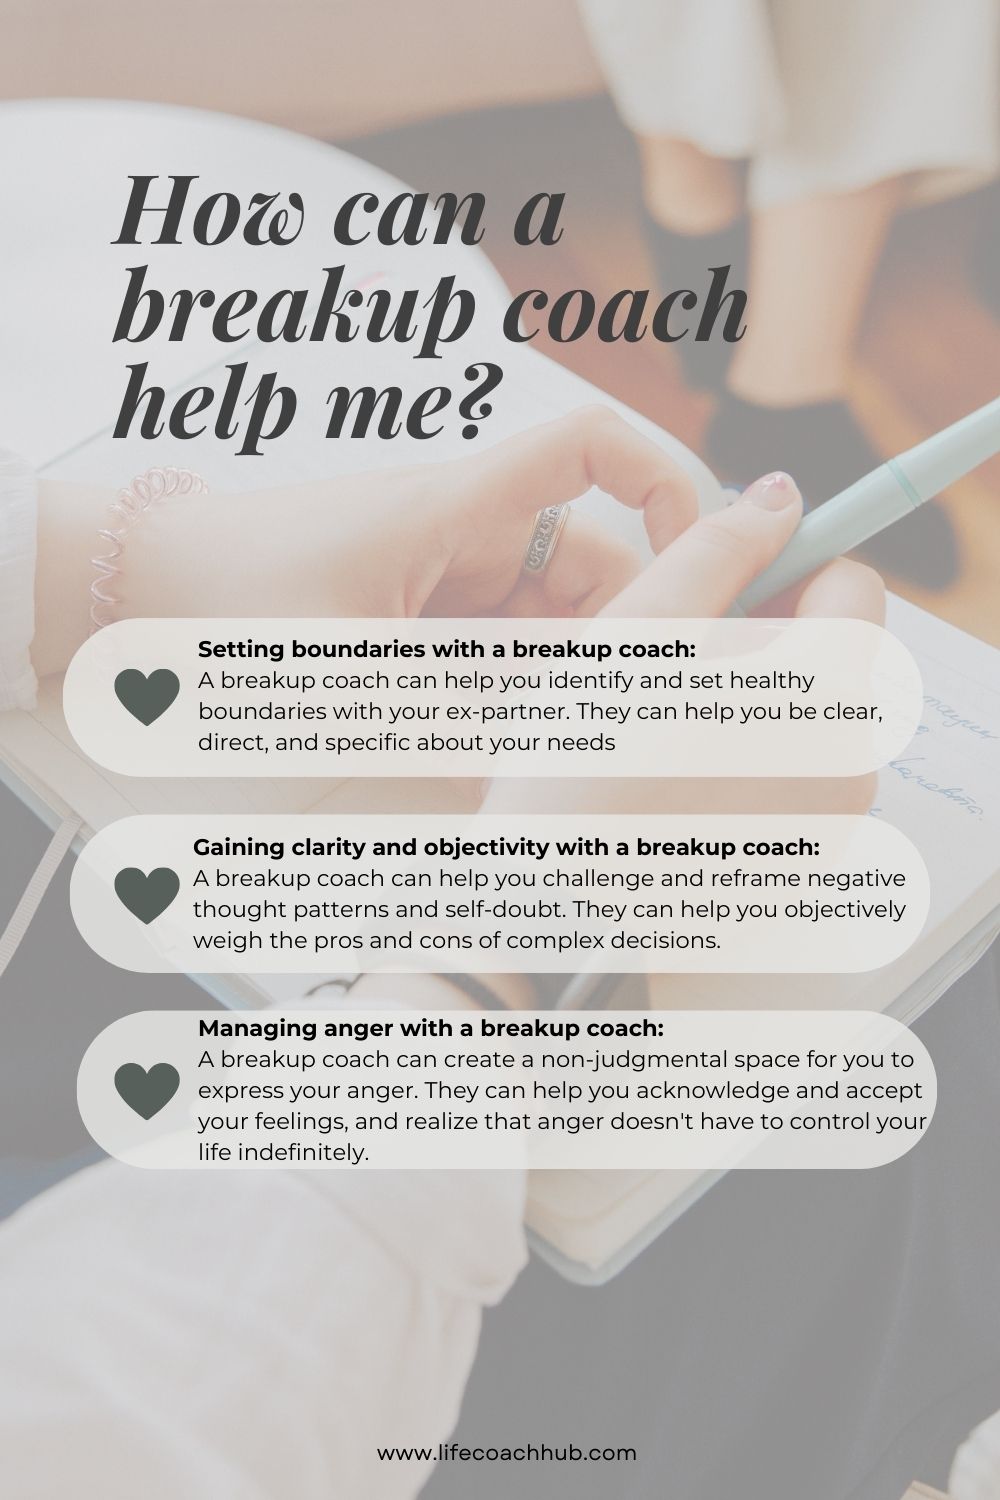 How can a breakup coach help me?